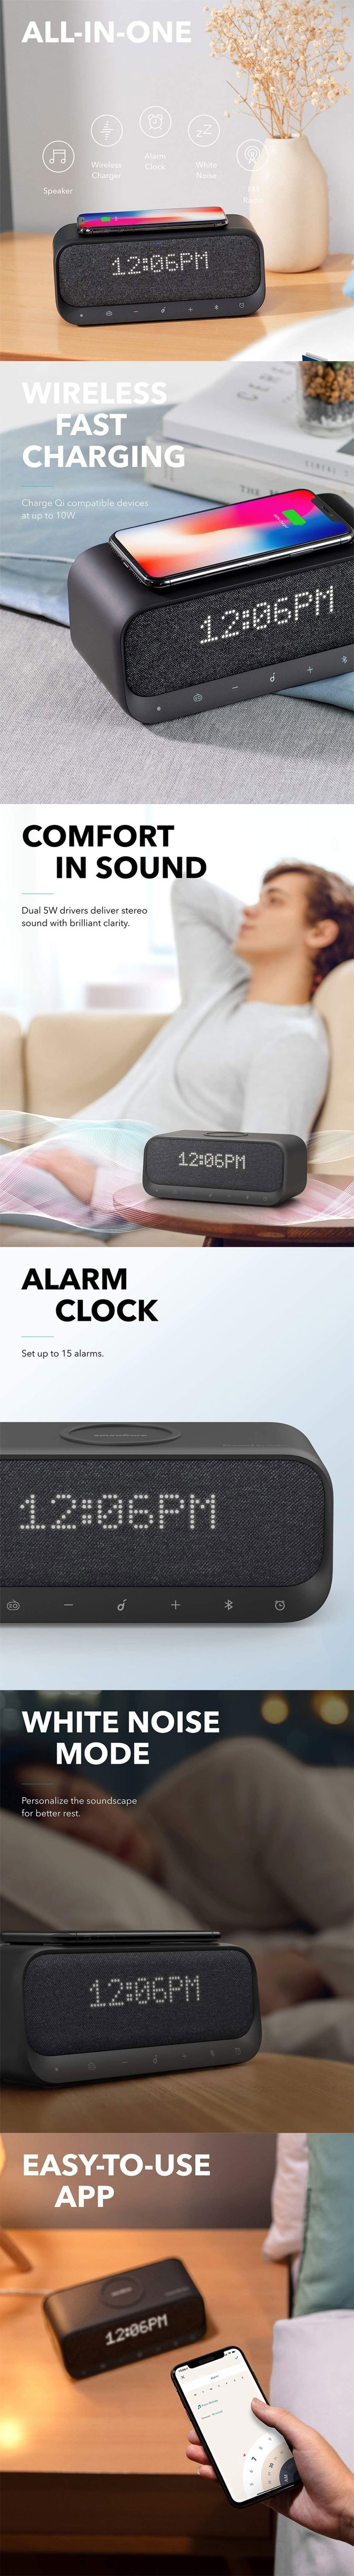 Anker Soundcore Wakey Bluetooth Speakers with Alarm Clock